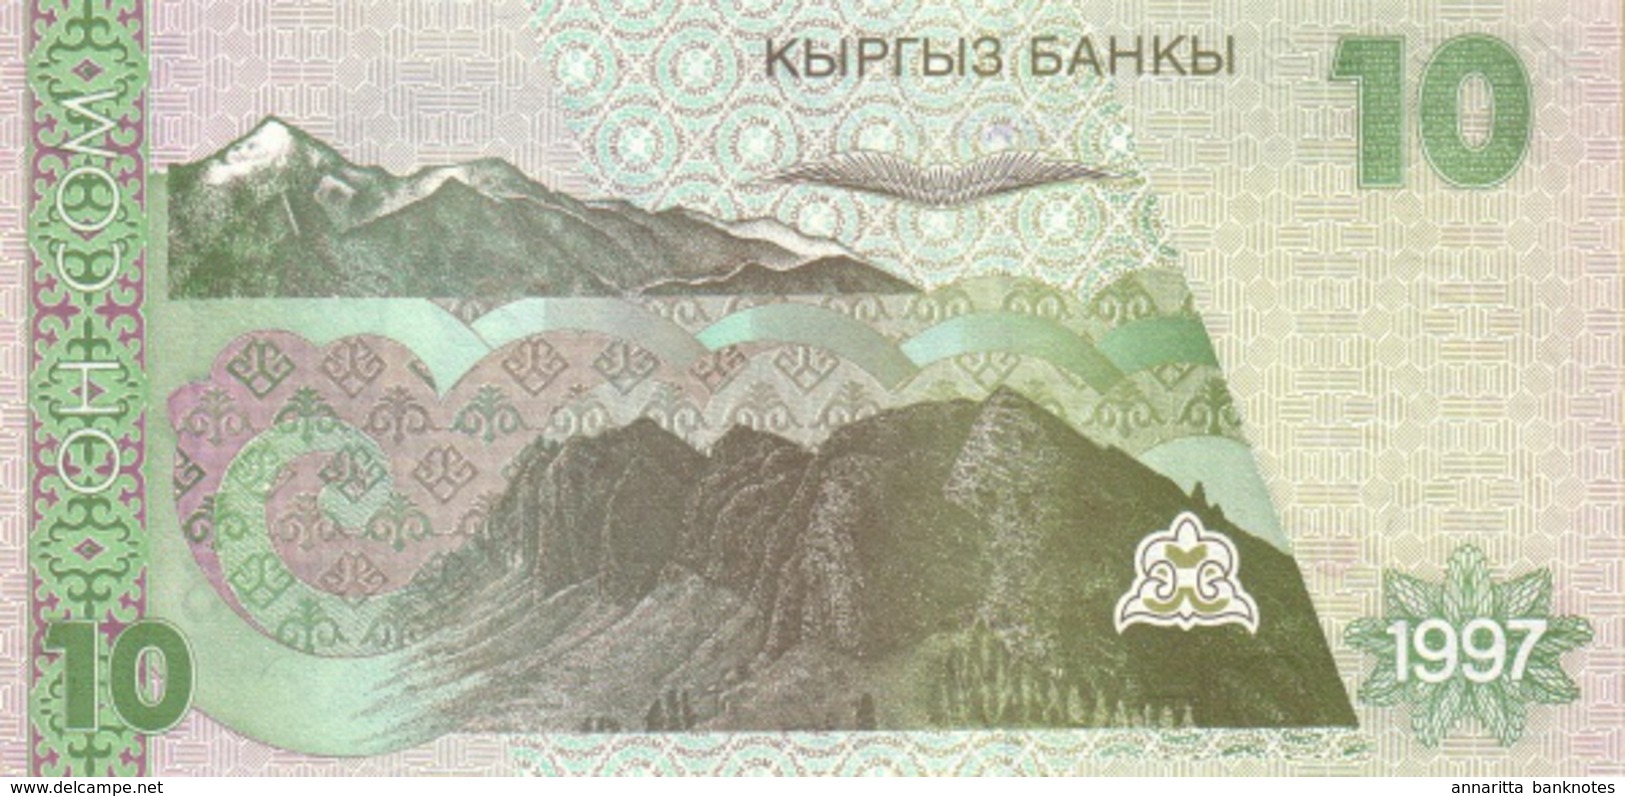 KYRGYZSTAN 10 COM (SOM) 1997 P-14 UNC [ KG212a ] - Kirguistán